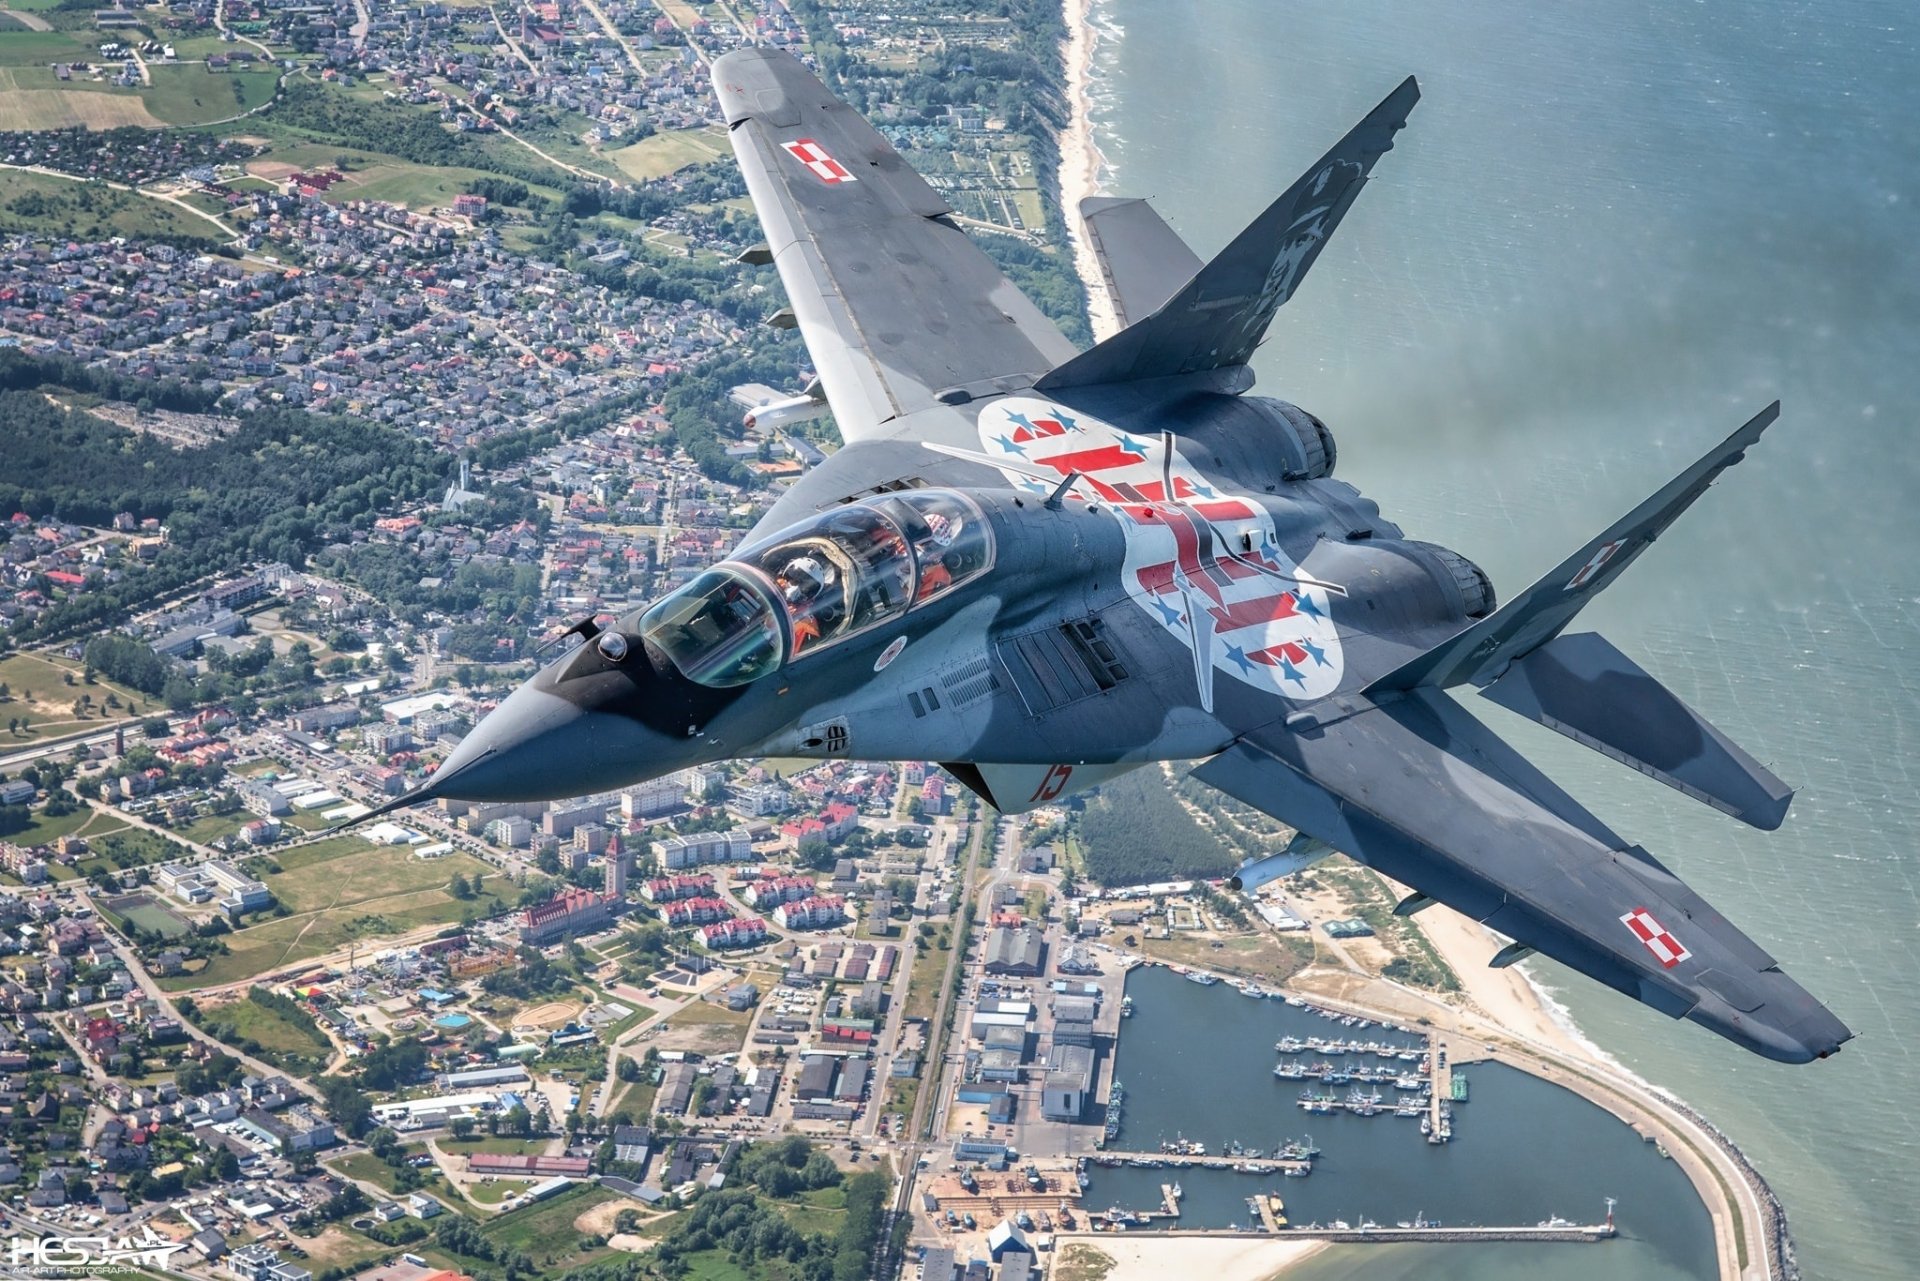 Download Warplane Aircraft Jet Fighter Military Mikoyan MiG-29 Mikoyan MiG-29  HD Wallpaper by HESJA Air-Art